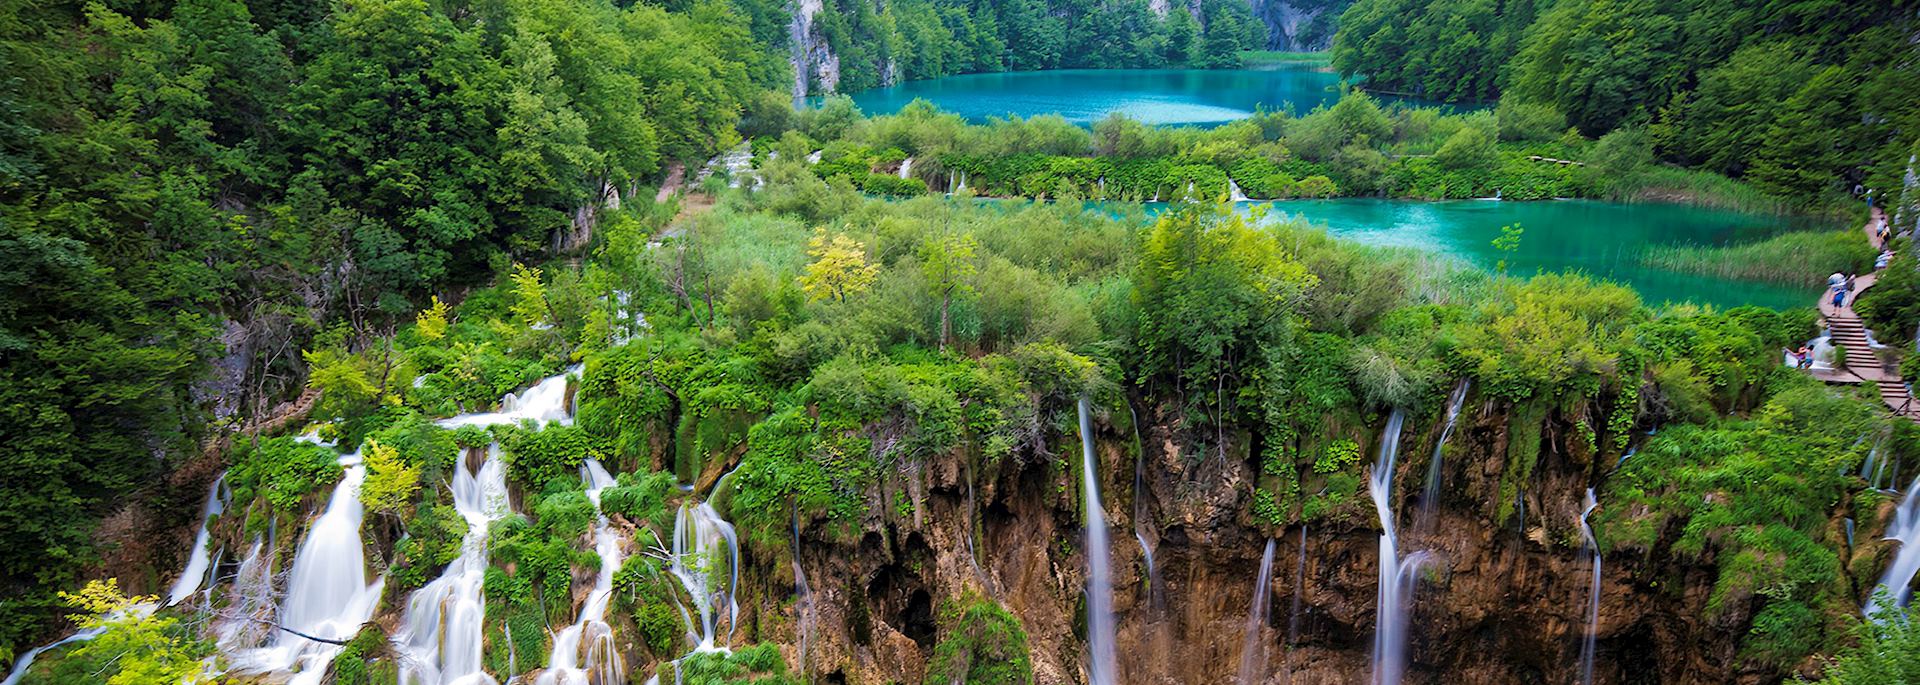 Waterfalls at Plitvice Lakes National Park